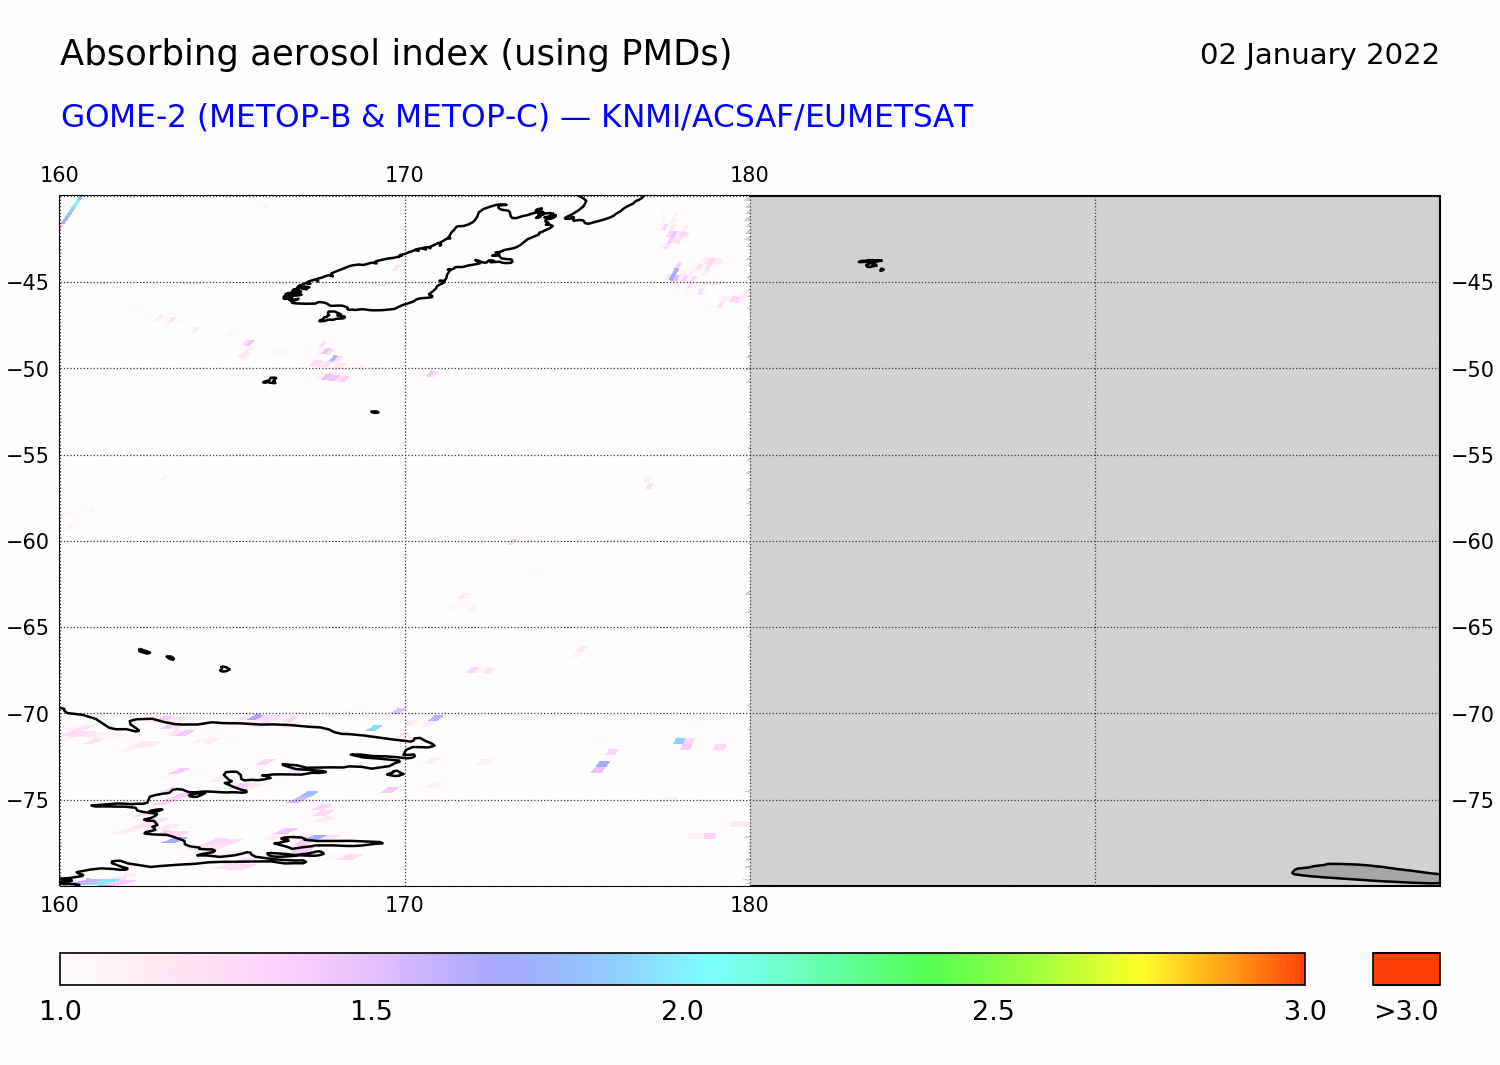 GOME-2 - Absorbing aerosol index of 02 January 2022